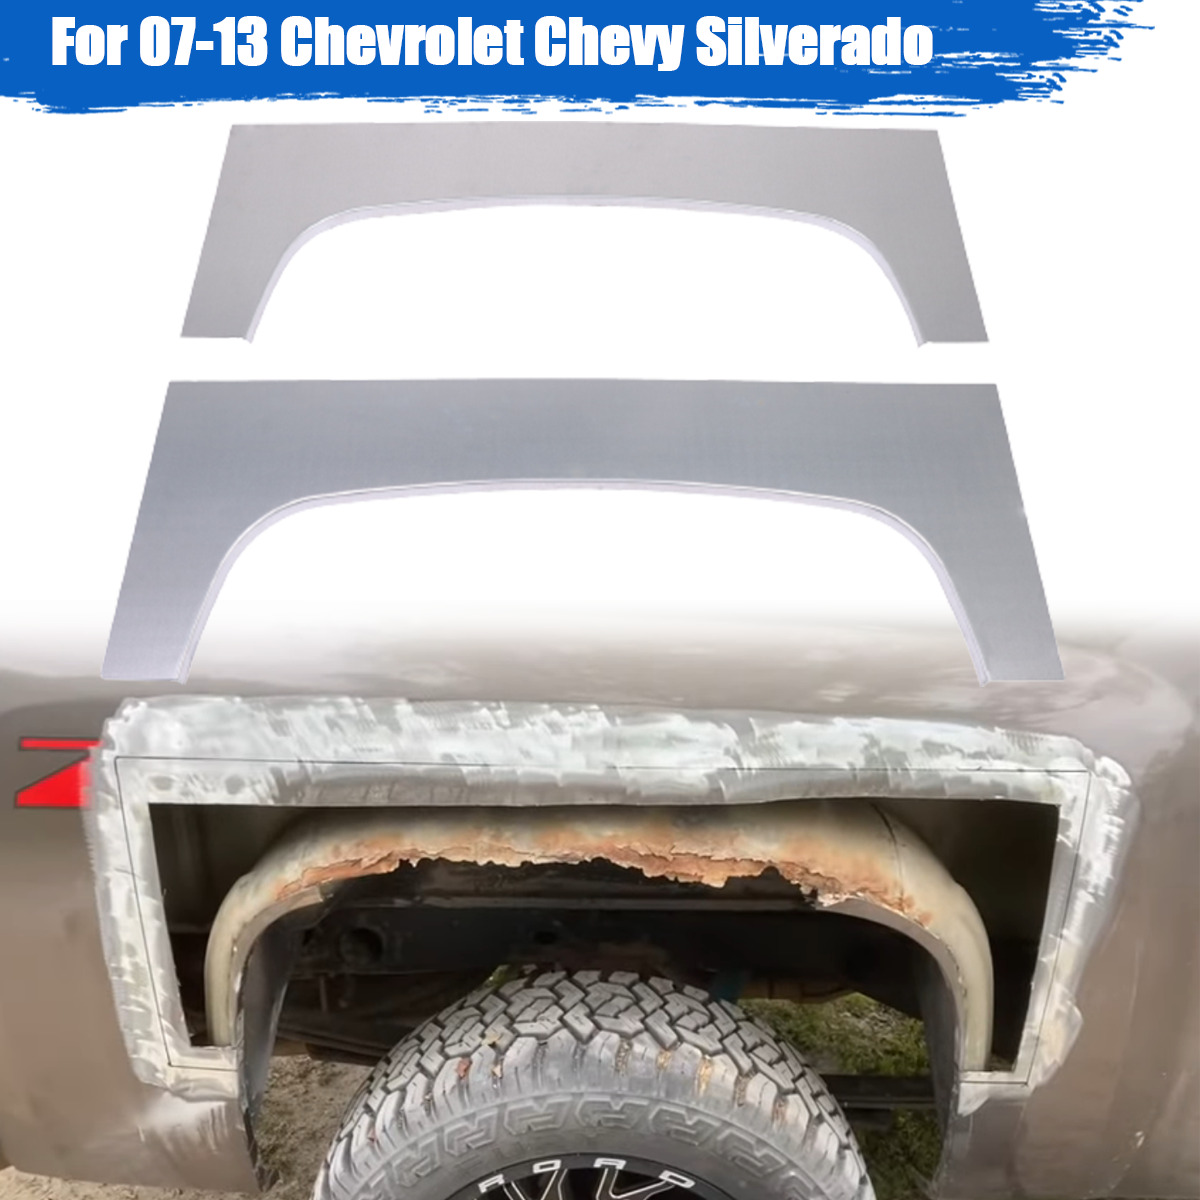 For 2007-2013 Chevrolet Chevy Silverado Upper Rear Wheel Arch Skin Repair Panels